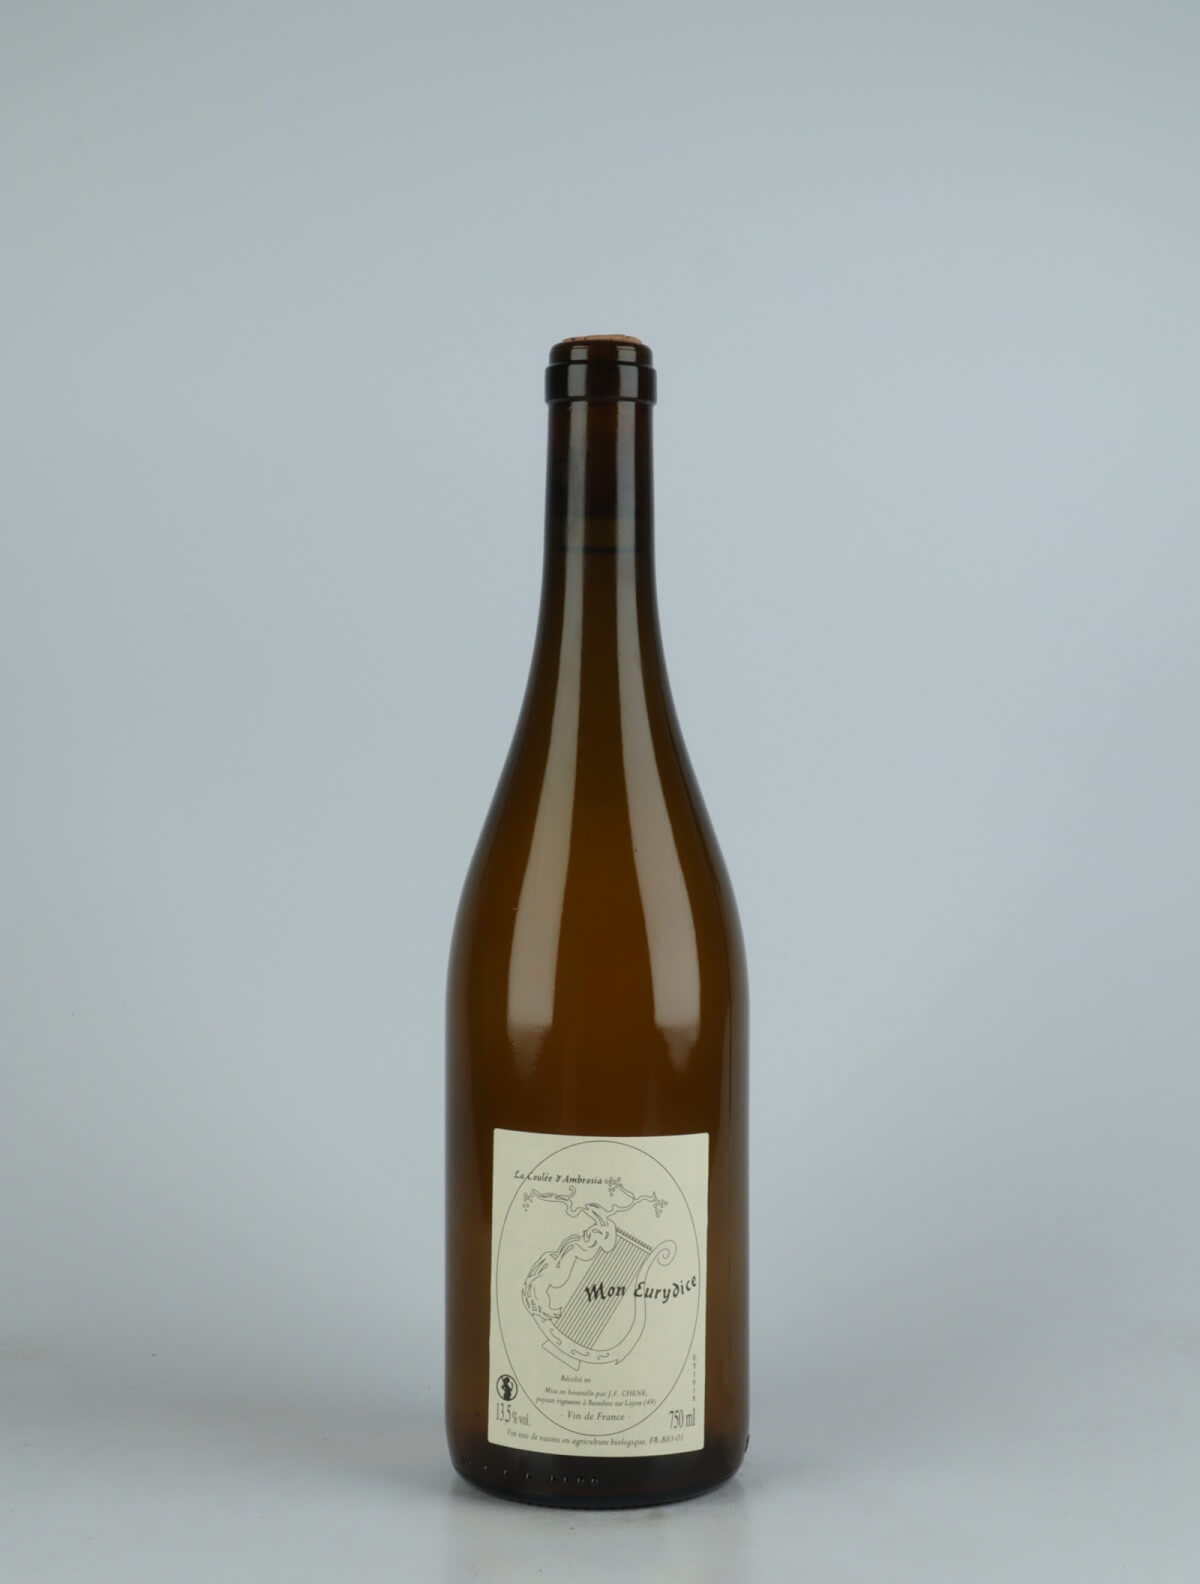 A bottle 2016 Mon Eurydice White wine from Jean-Francois Chene, Loire in France